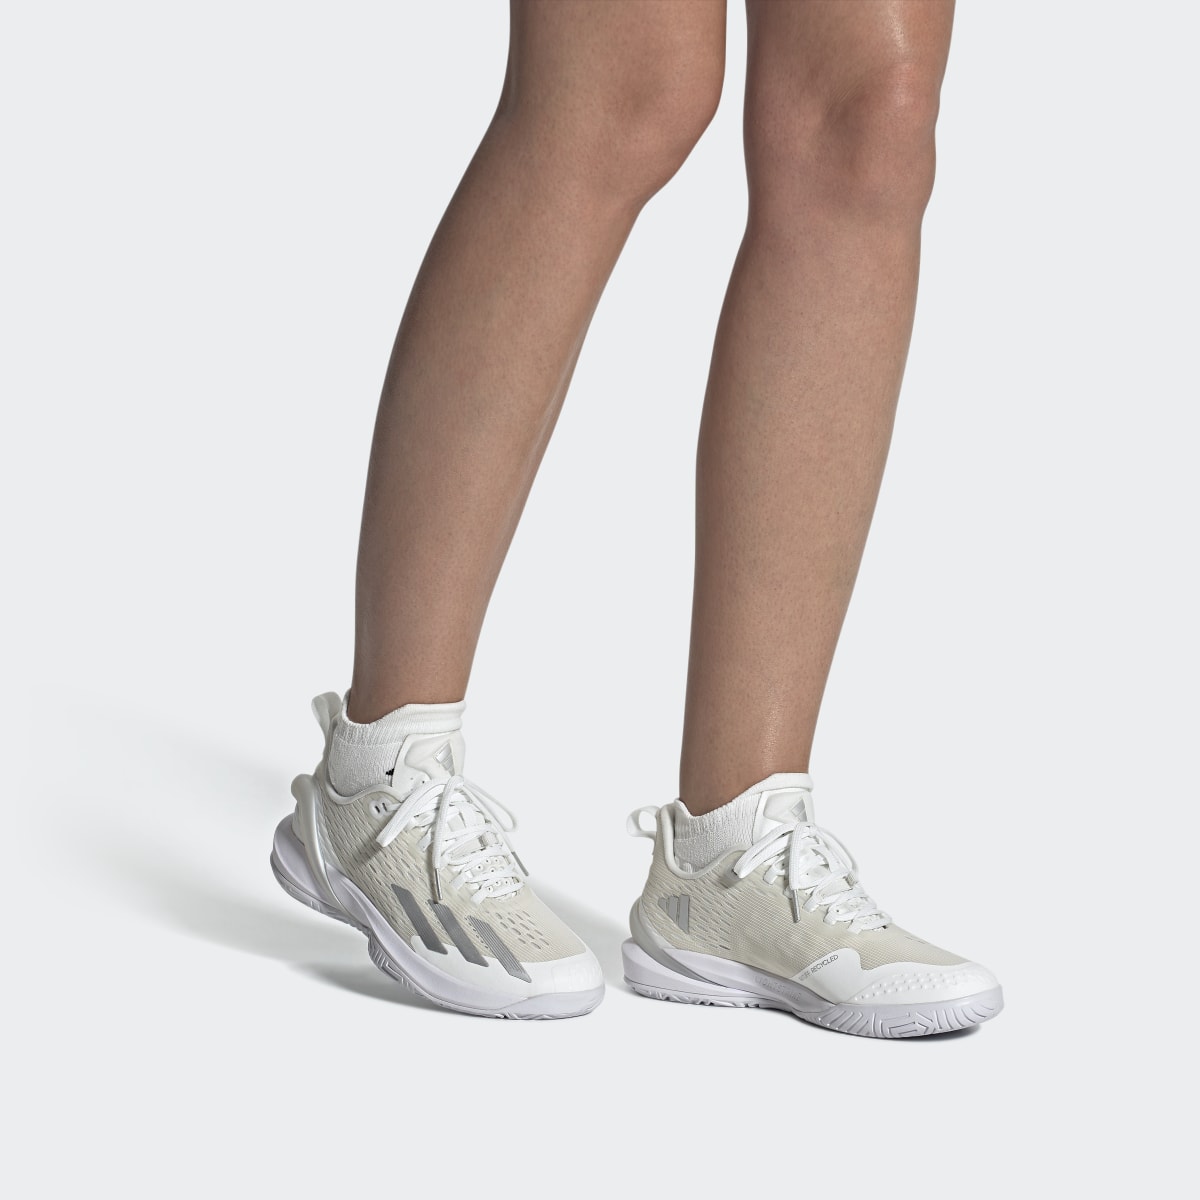 Adidas adizero Cybersonic Tenis Ayakkabısı. 5